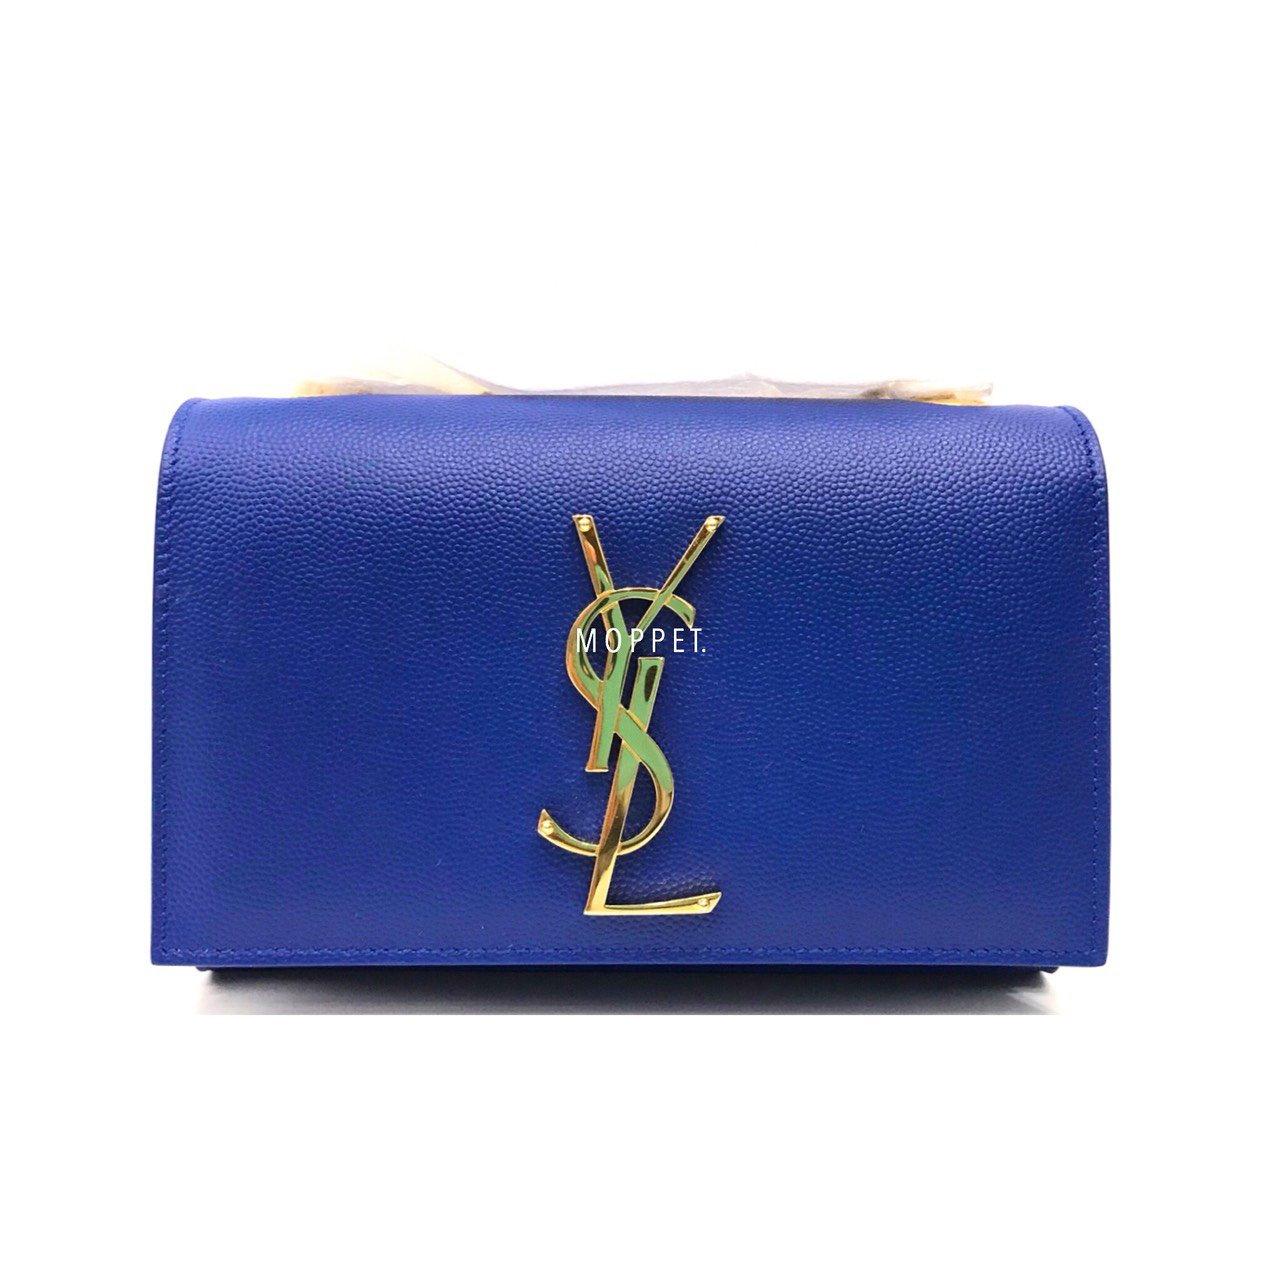 New YSL Kate Mini Bag in Royal Blue Caviar GHW